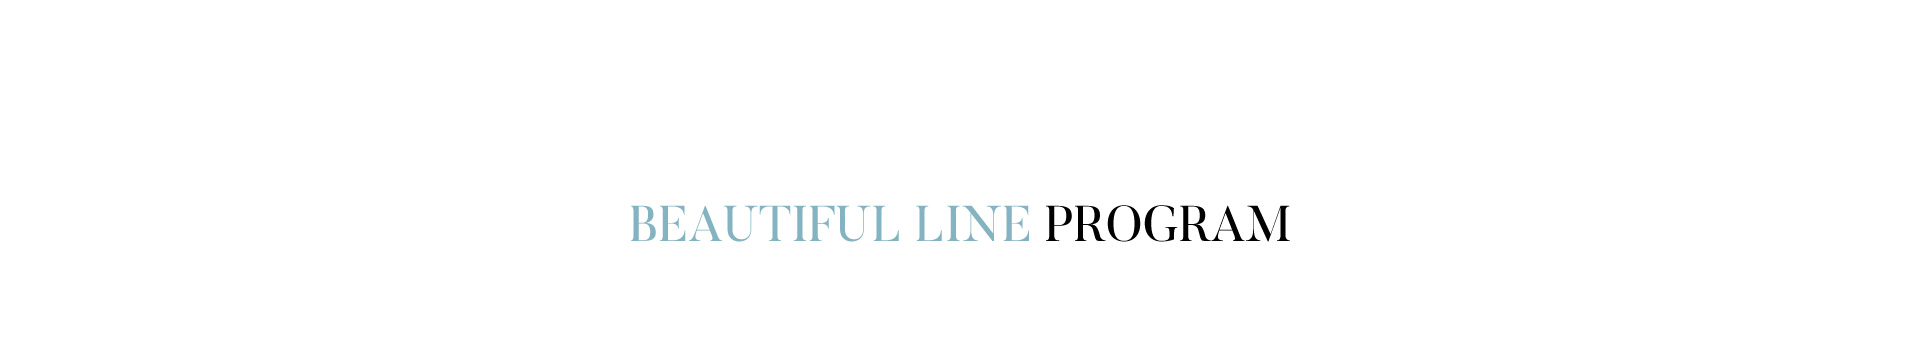 BEAUTIFUL LINE PROGRAM